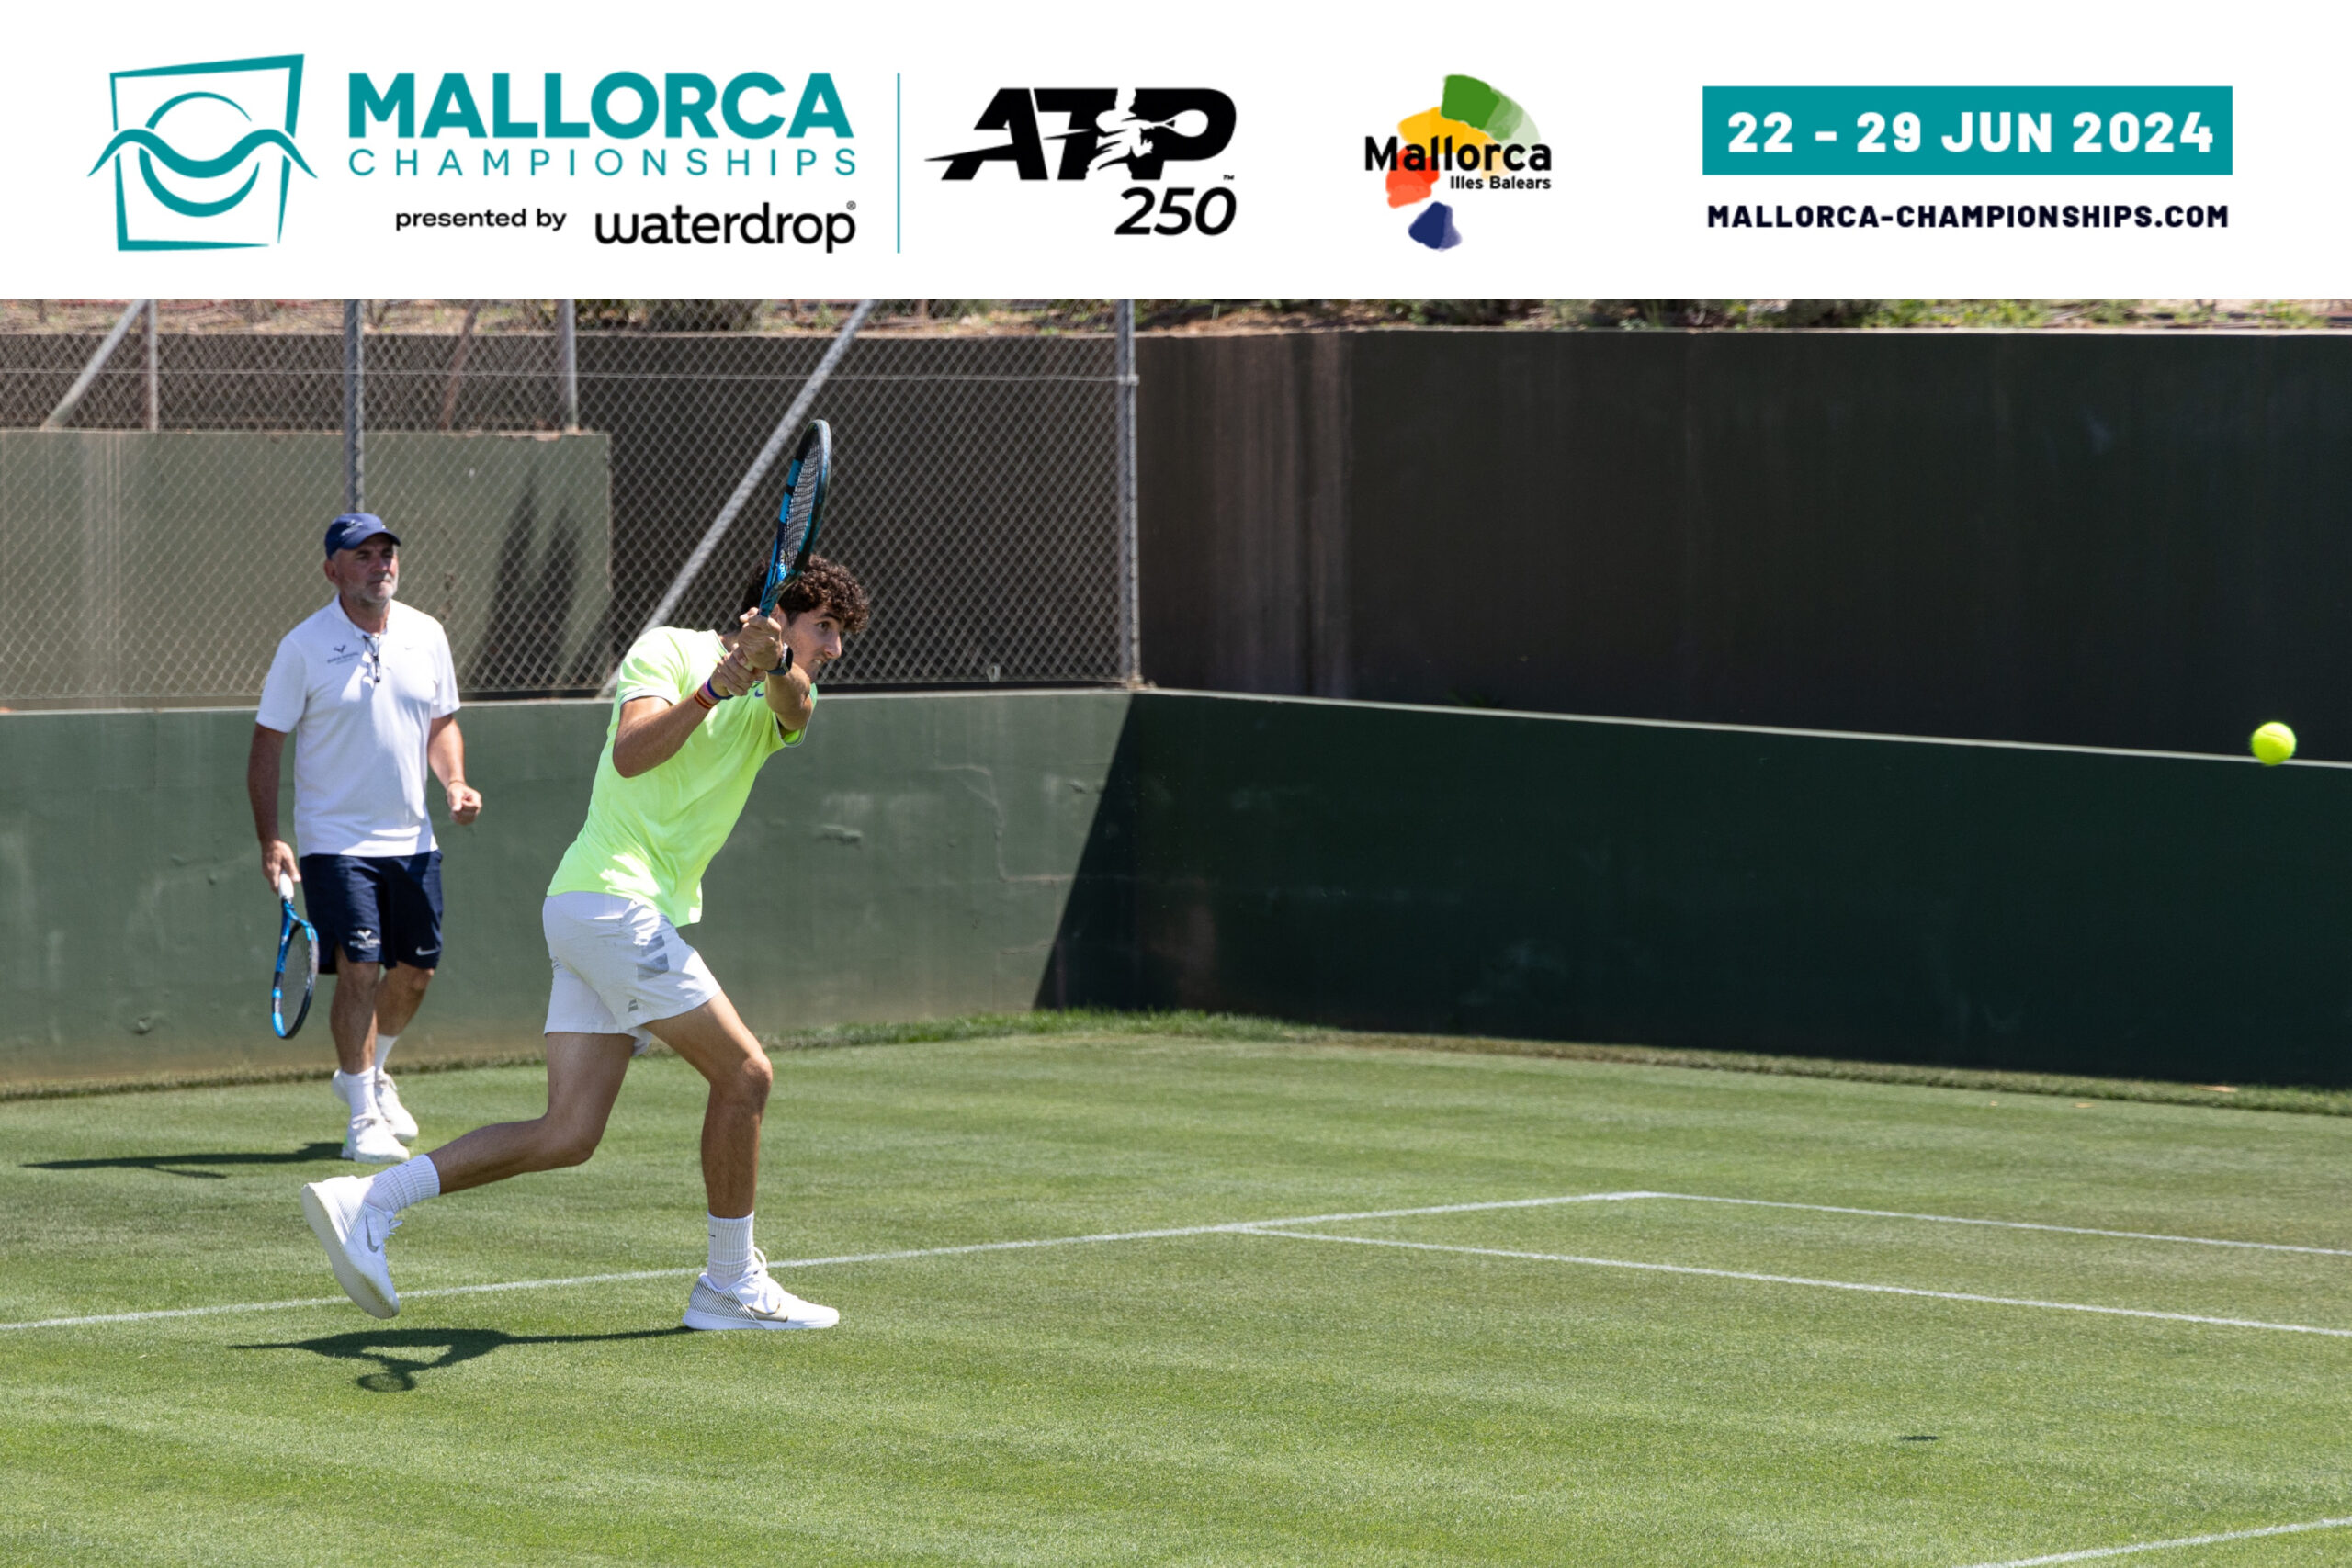 “Joan Nadal, el talento emergente, recibe una Wild Card para el ATP 250 Mallorca Championships”